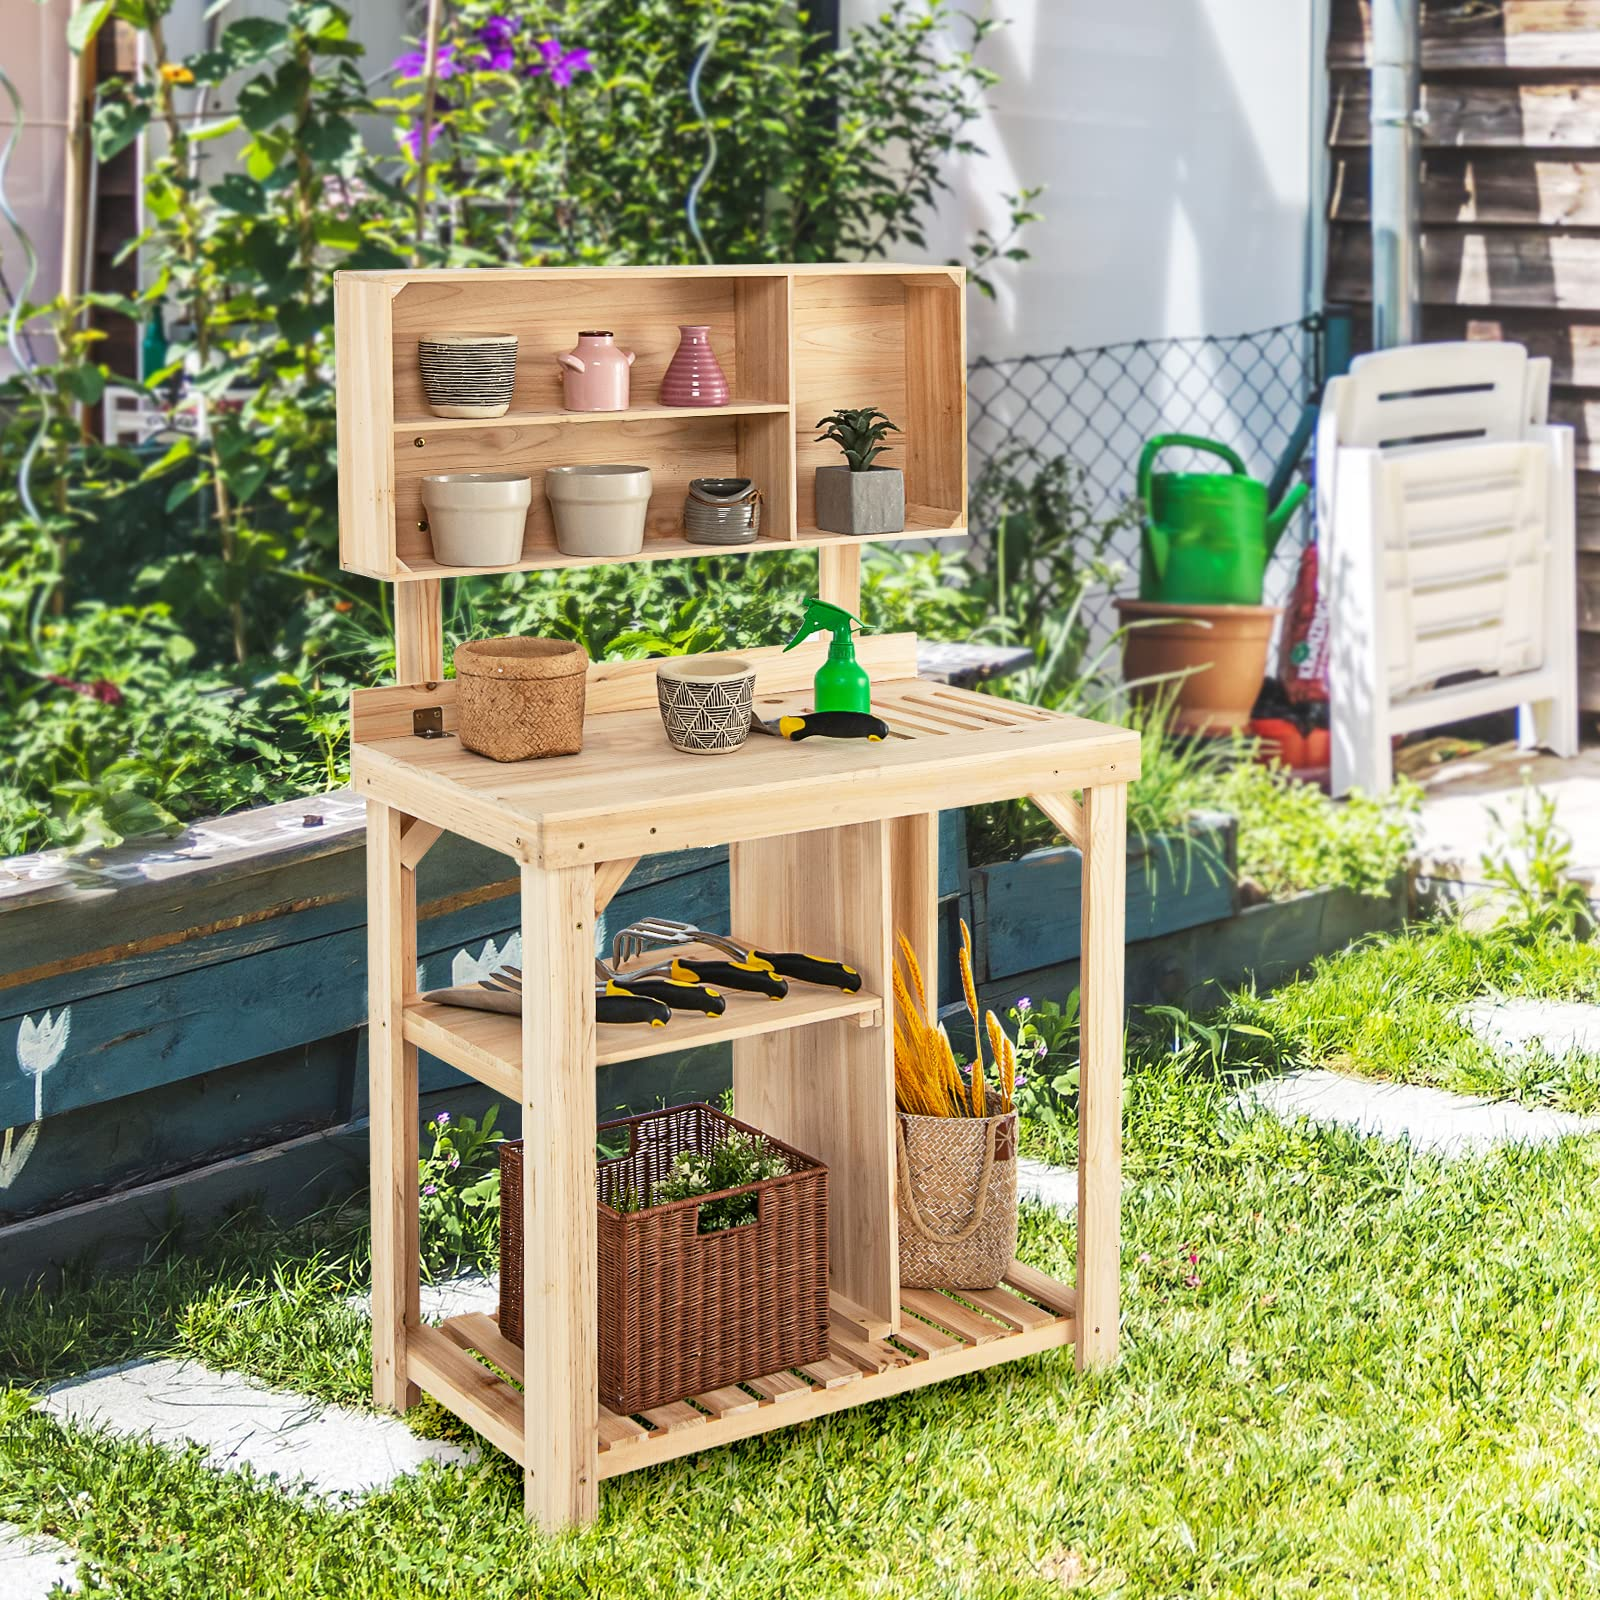 Giantex Potting Bench, Garden Potting Table with Storage Shelf